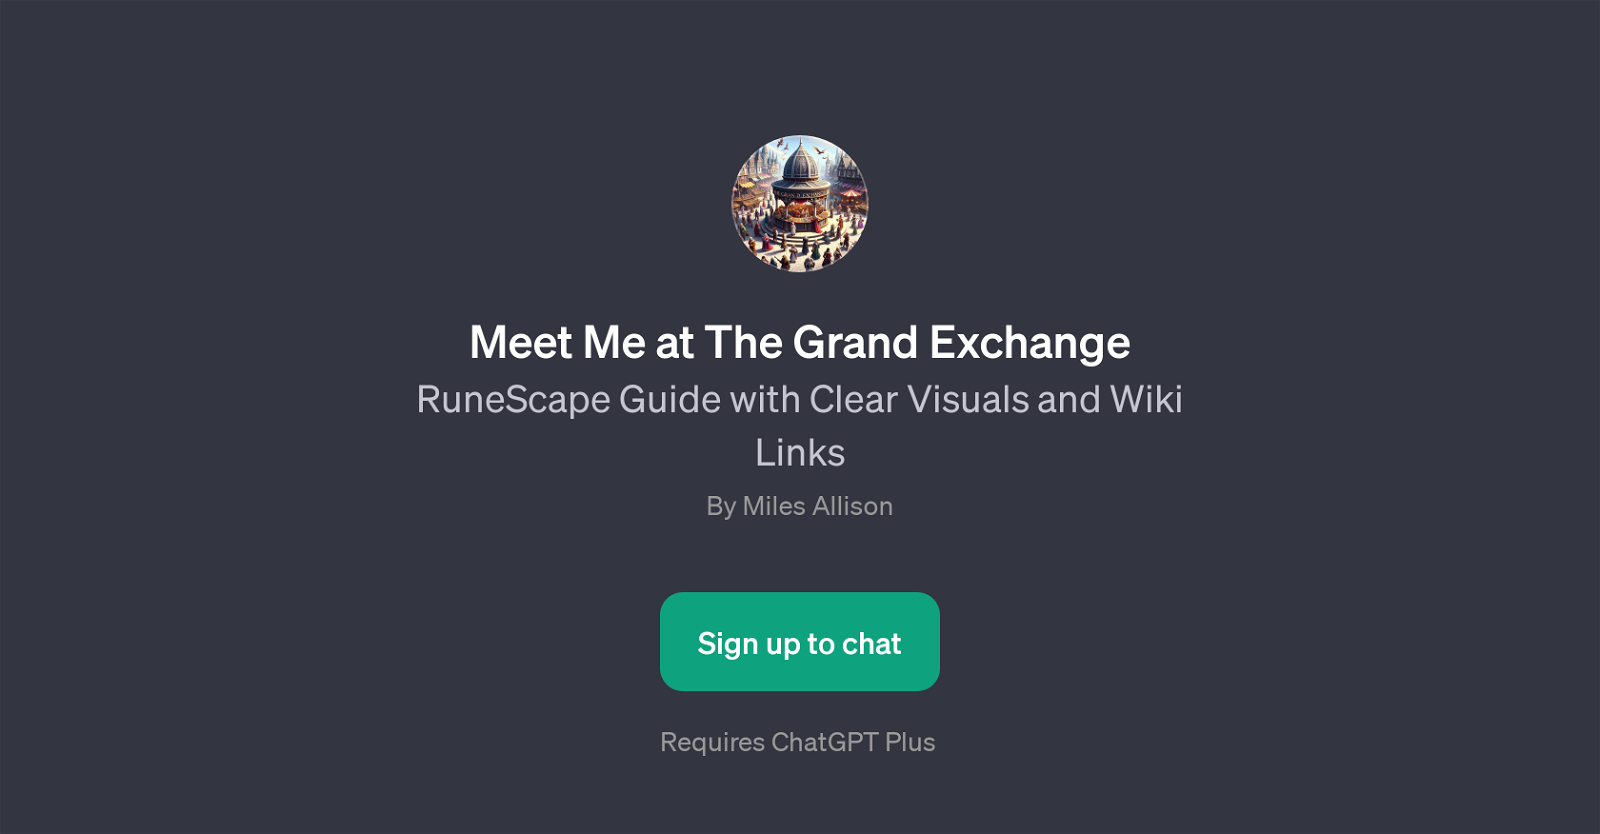 Meet Me at The Grand Exchange website